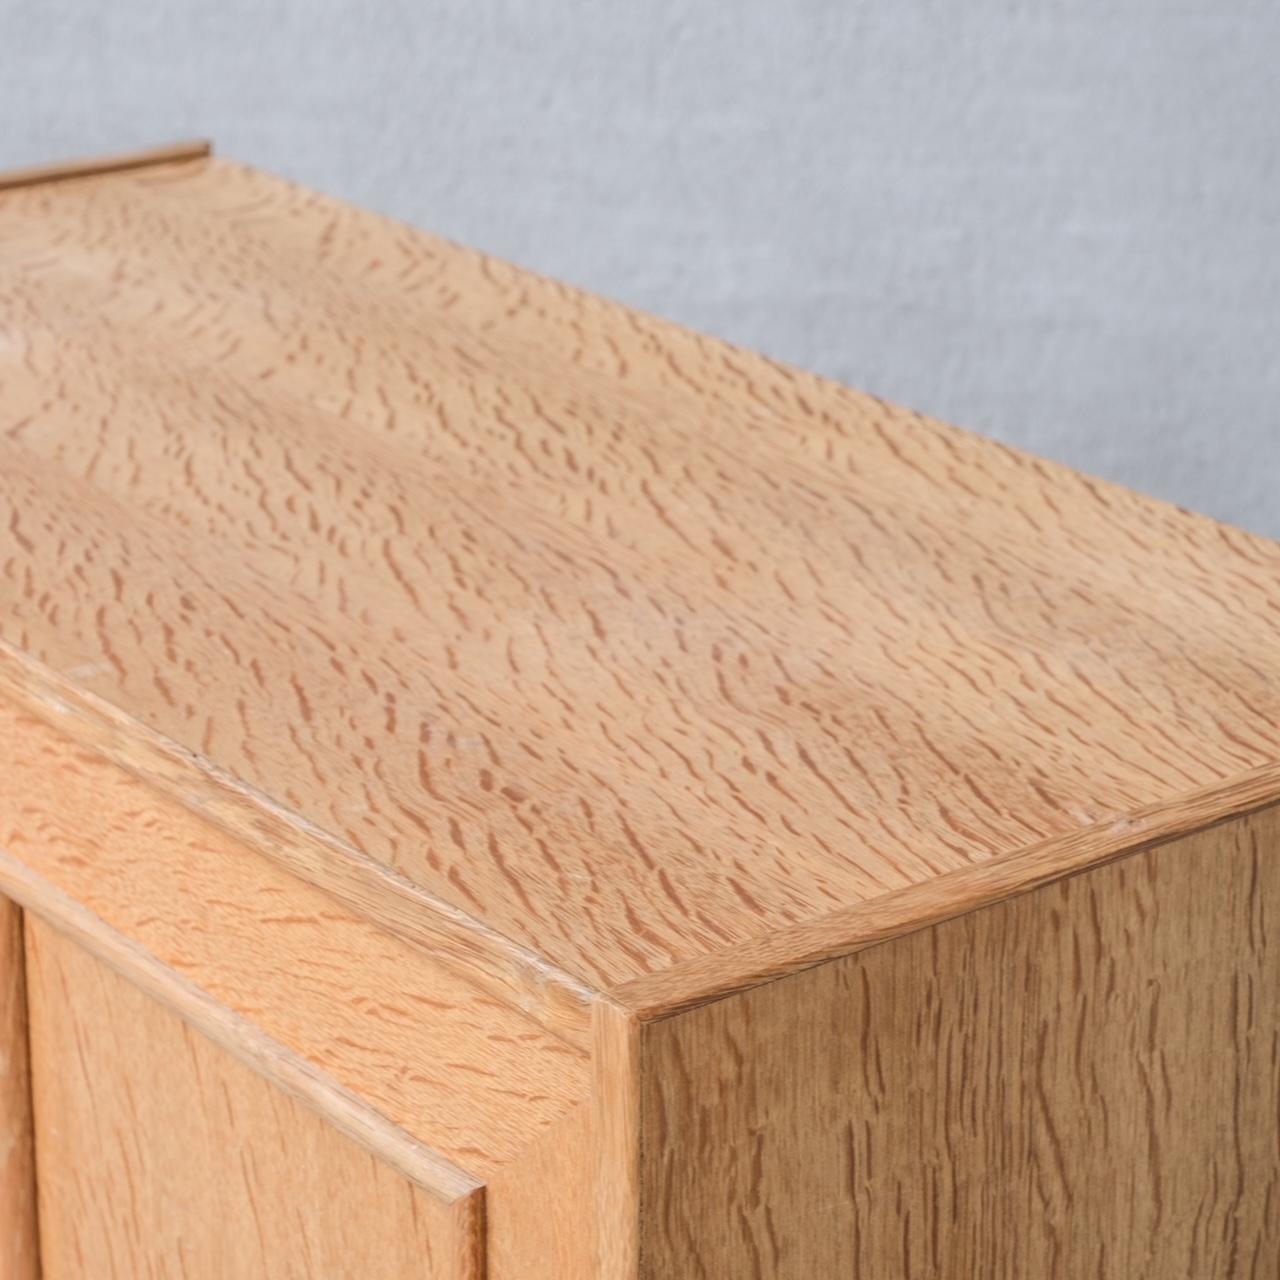 20th Century Oak Danish Mid-Century Bedside Tables or Sideboards in manner of Kjaernulf